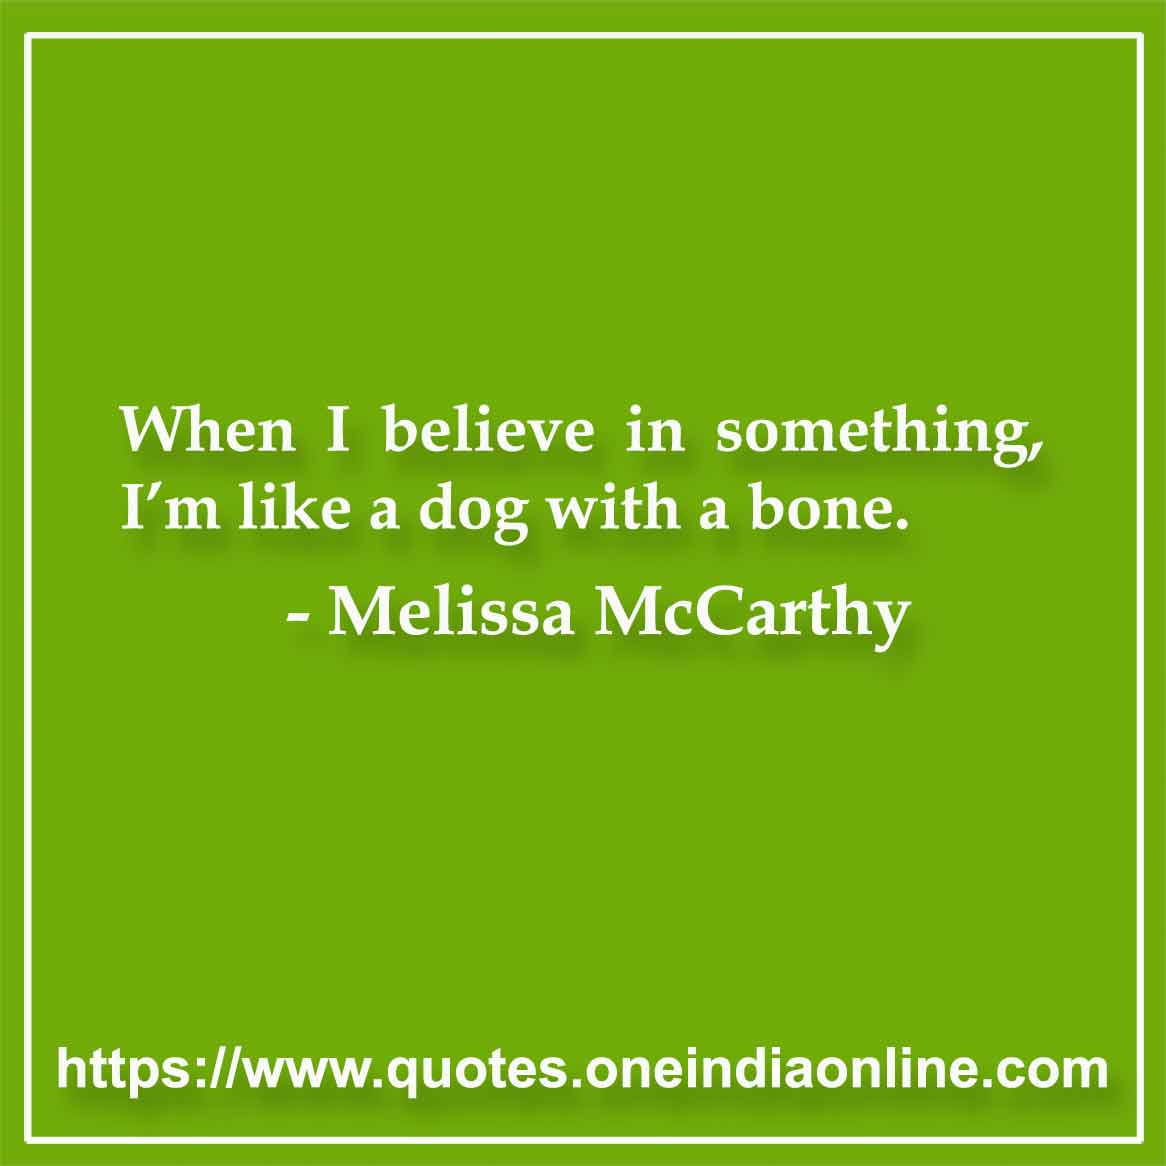 When I believe in something, I’m like a dog with a bone.

- Melissa McCarthy